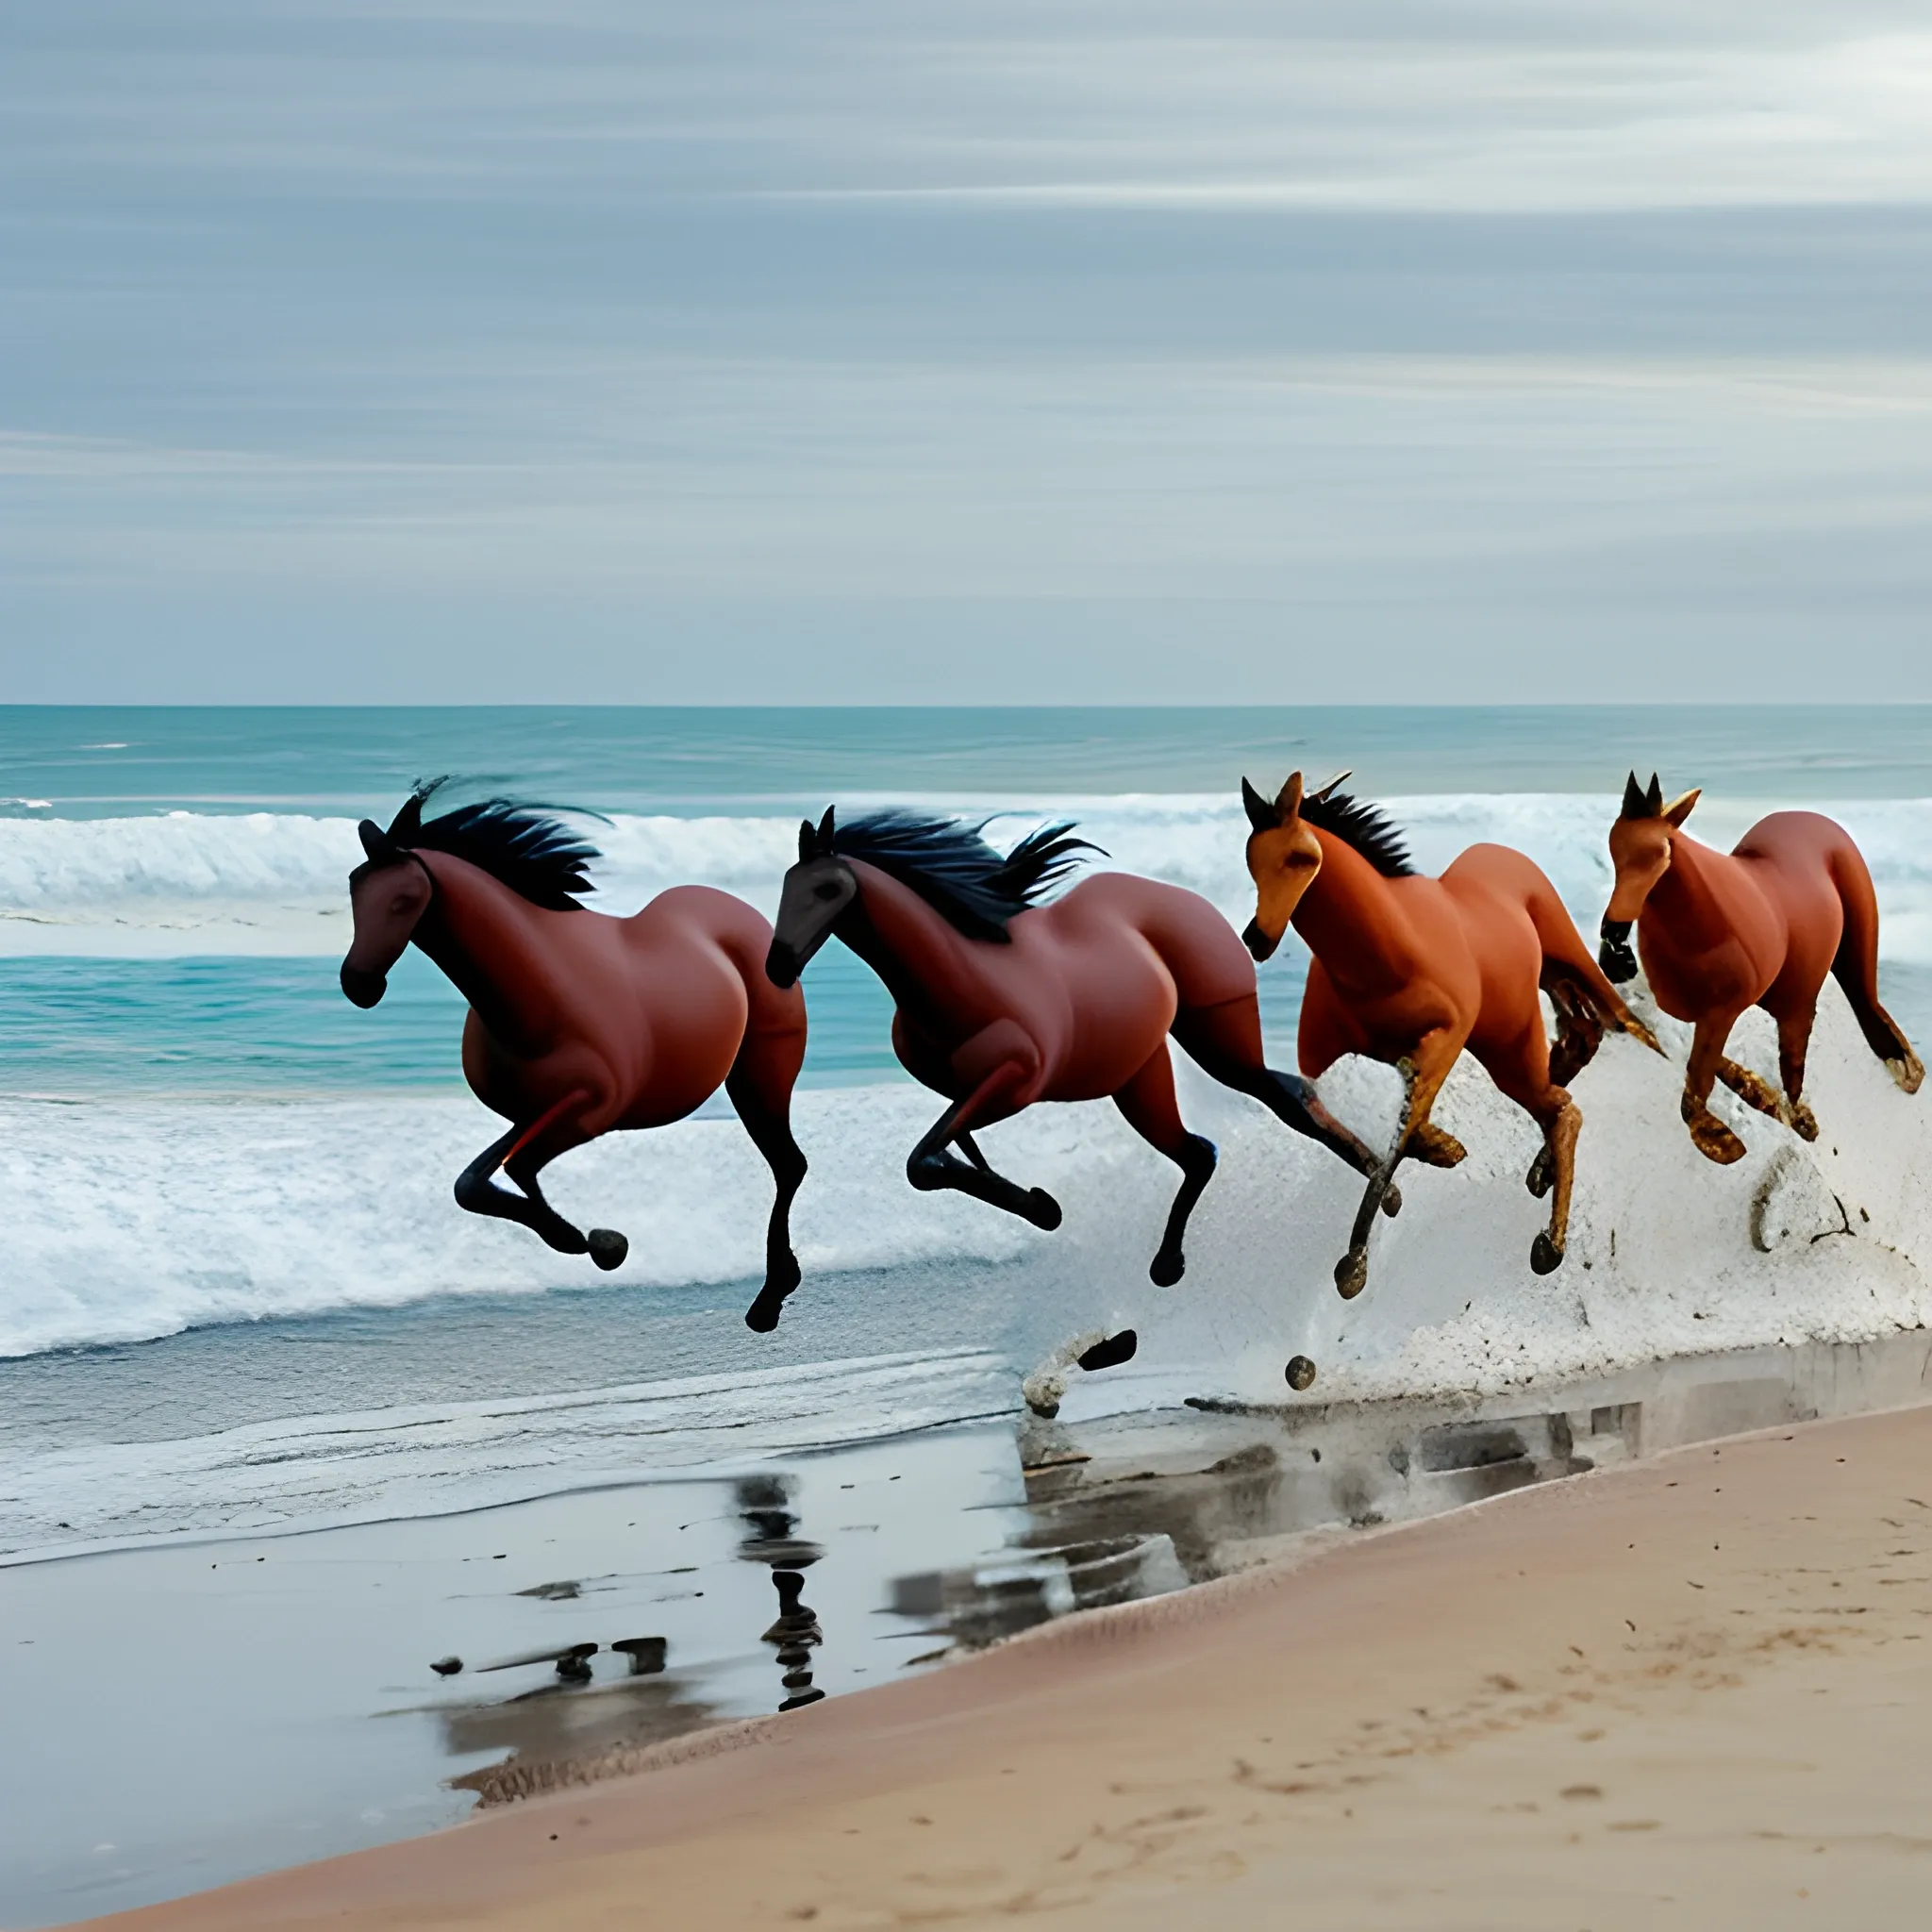 horses running on the beach.